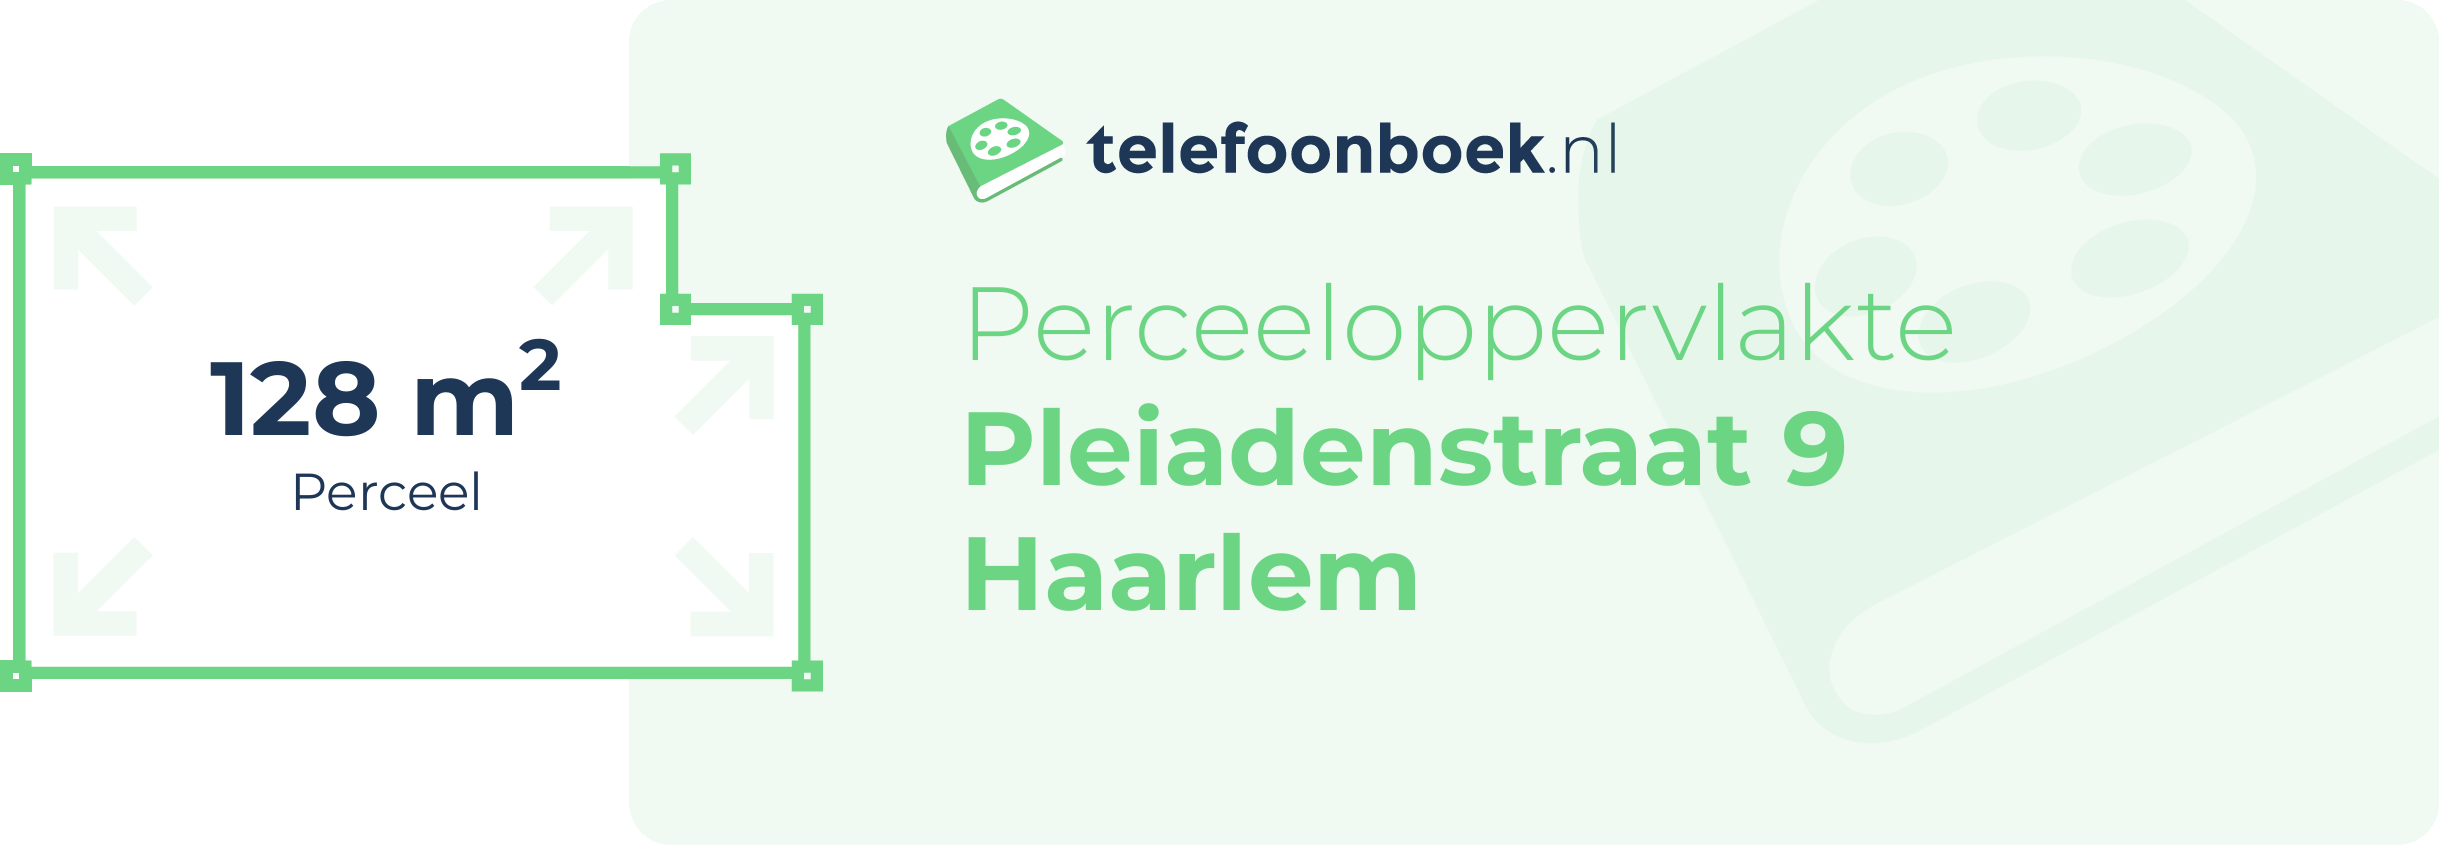 Perceeloppervlakte Pleiadenstraat 9 Haarlem